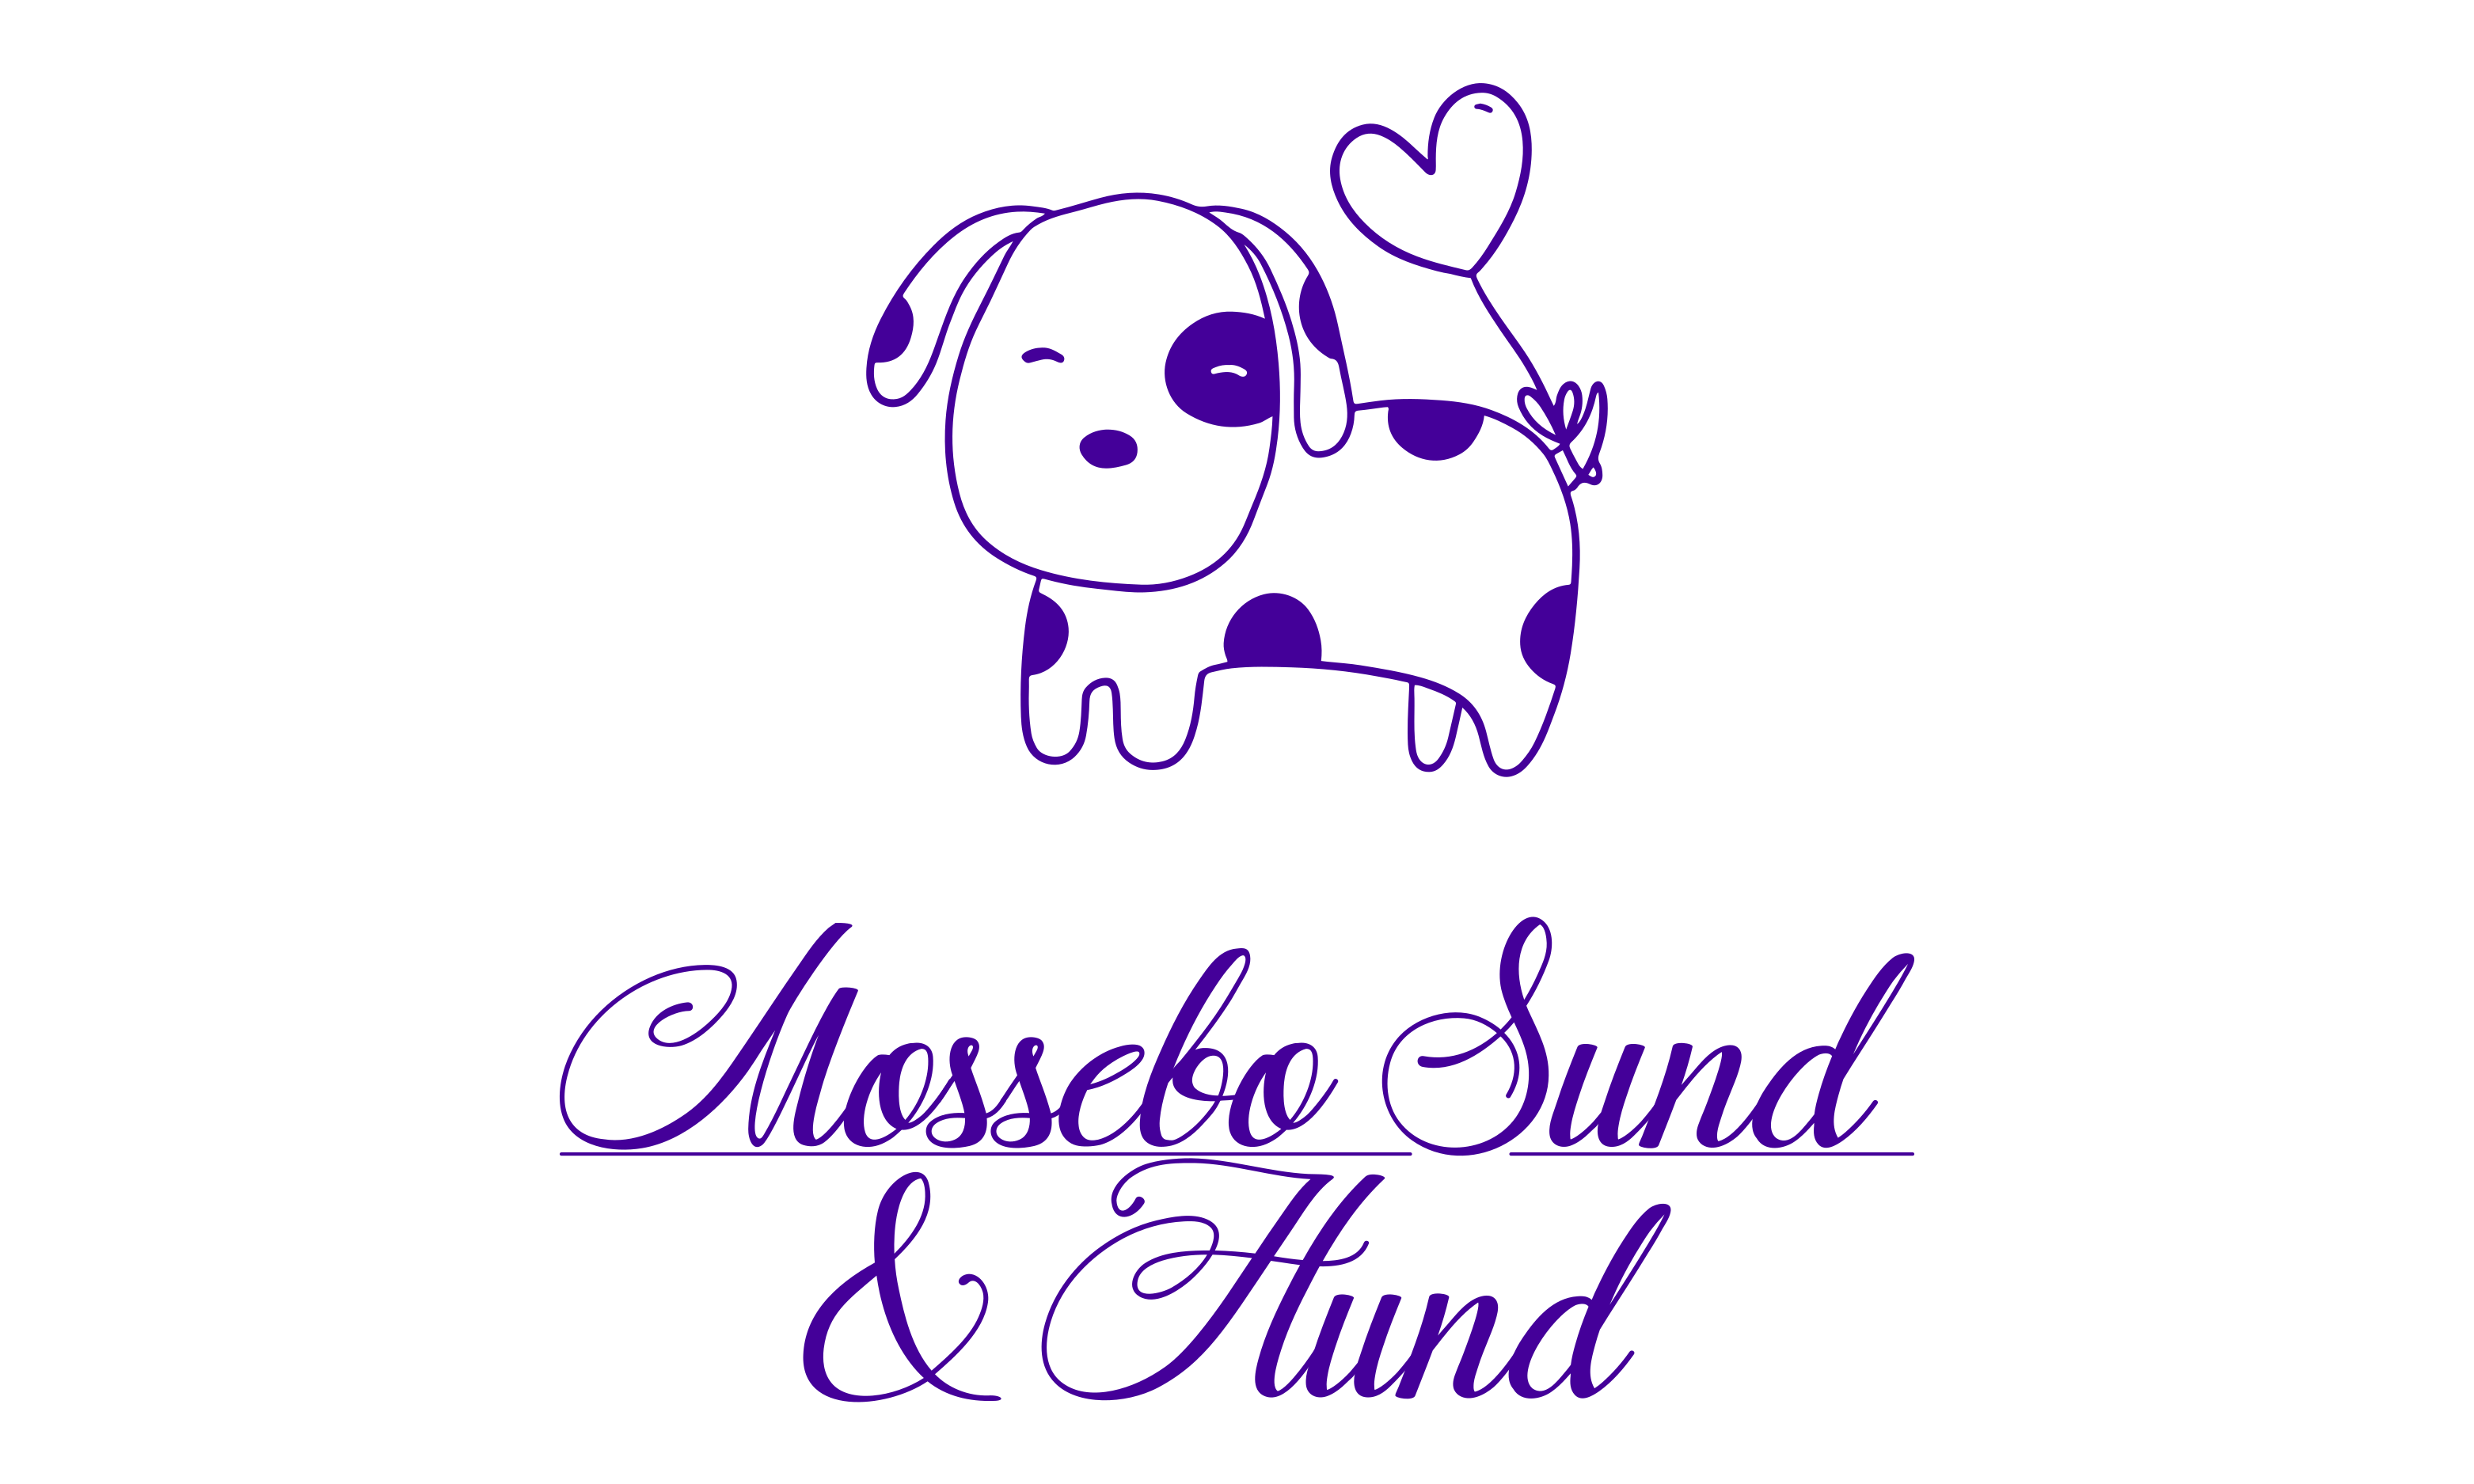 Mossebo Sund &Hund